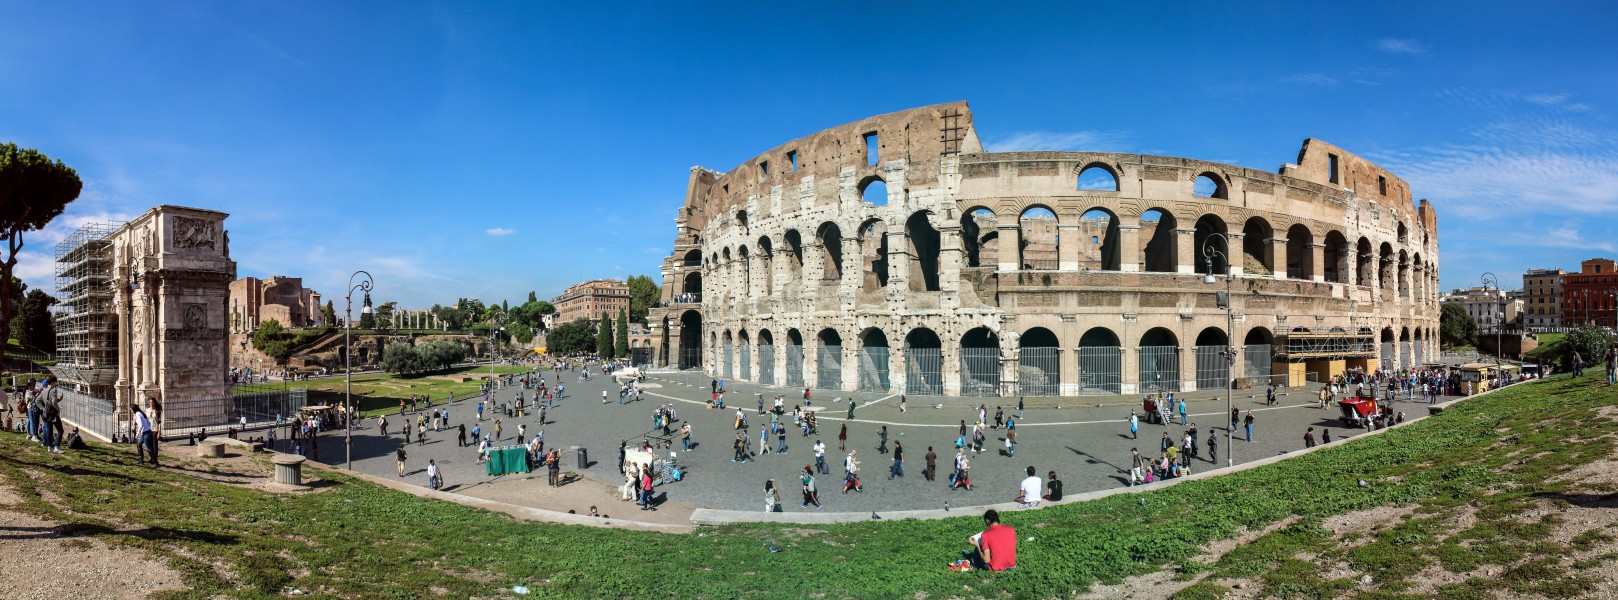 Rome (IT), Kolosseum -- 2013 -- 3386